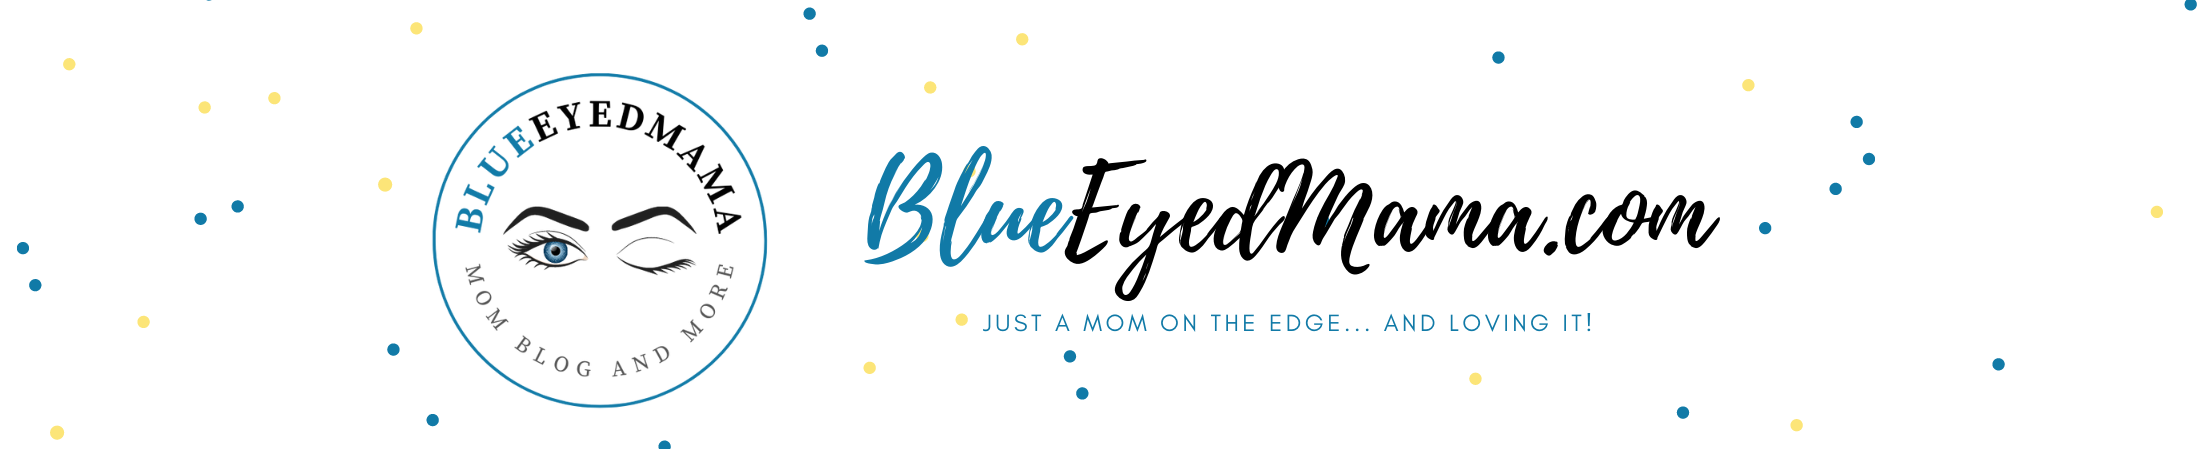 A Blue Eyed Mama's Blog